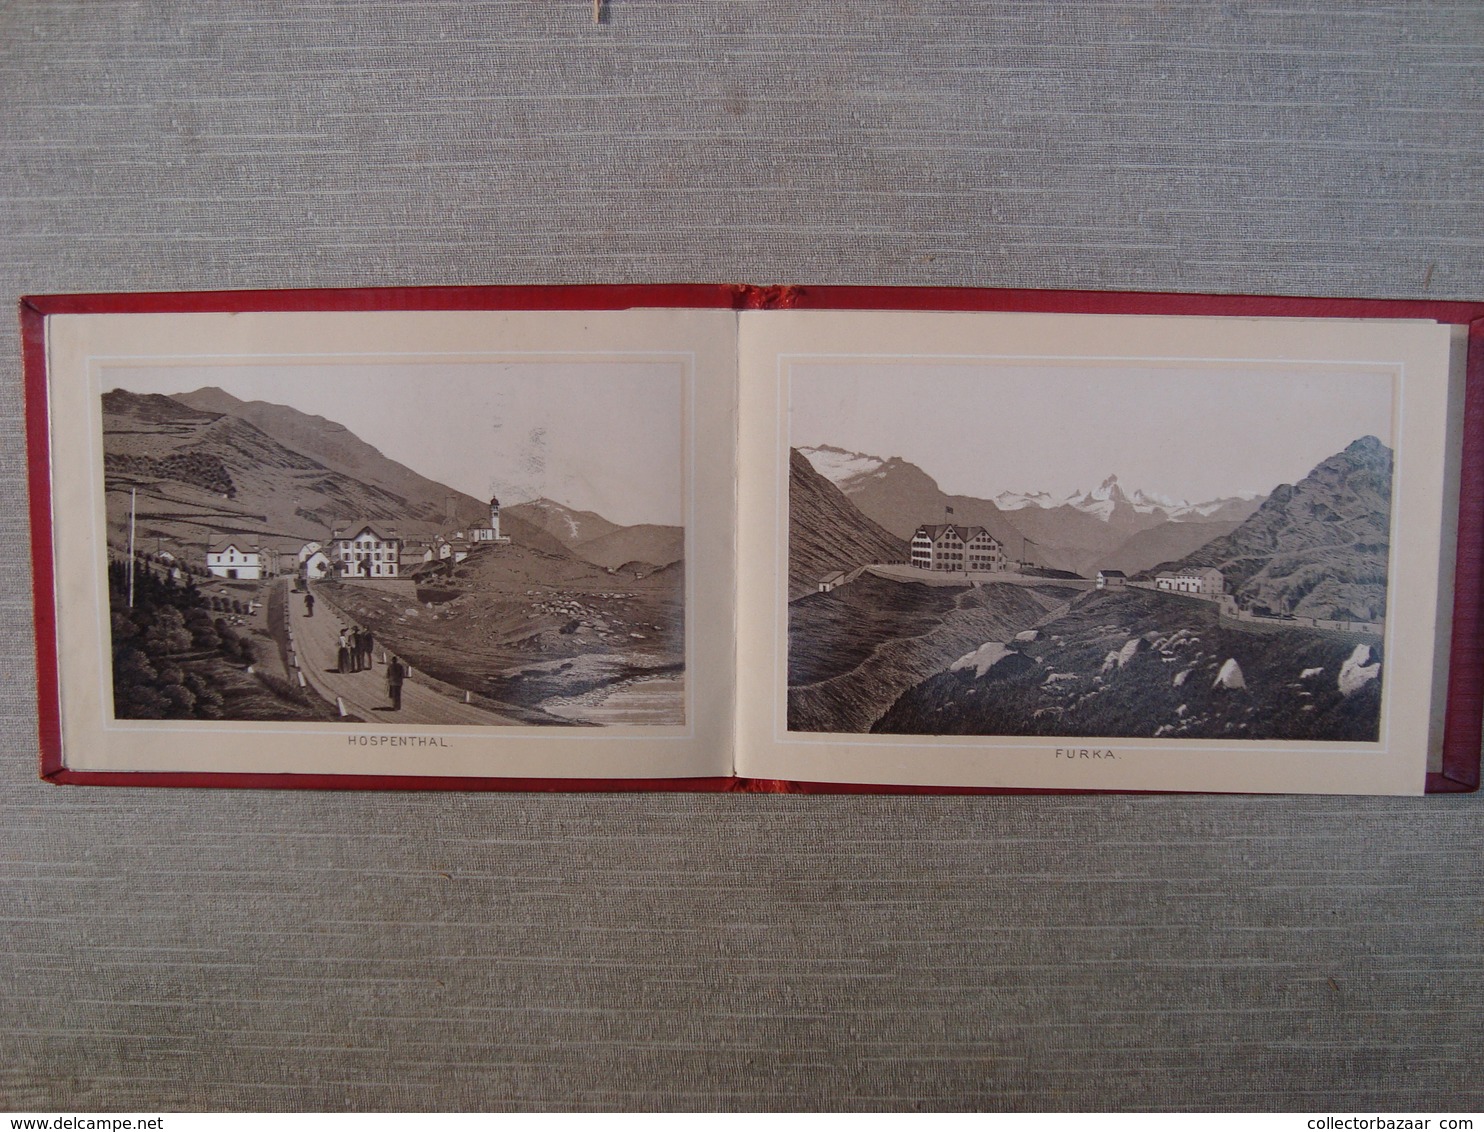 Album souvenir printed photographies ca1890 Souvenir route du St. Gotthard Karl Künzli Zurich Litho Synnberg & Ruttger